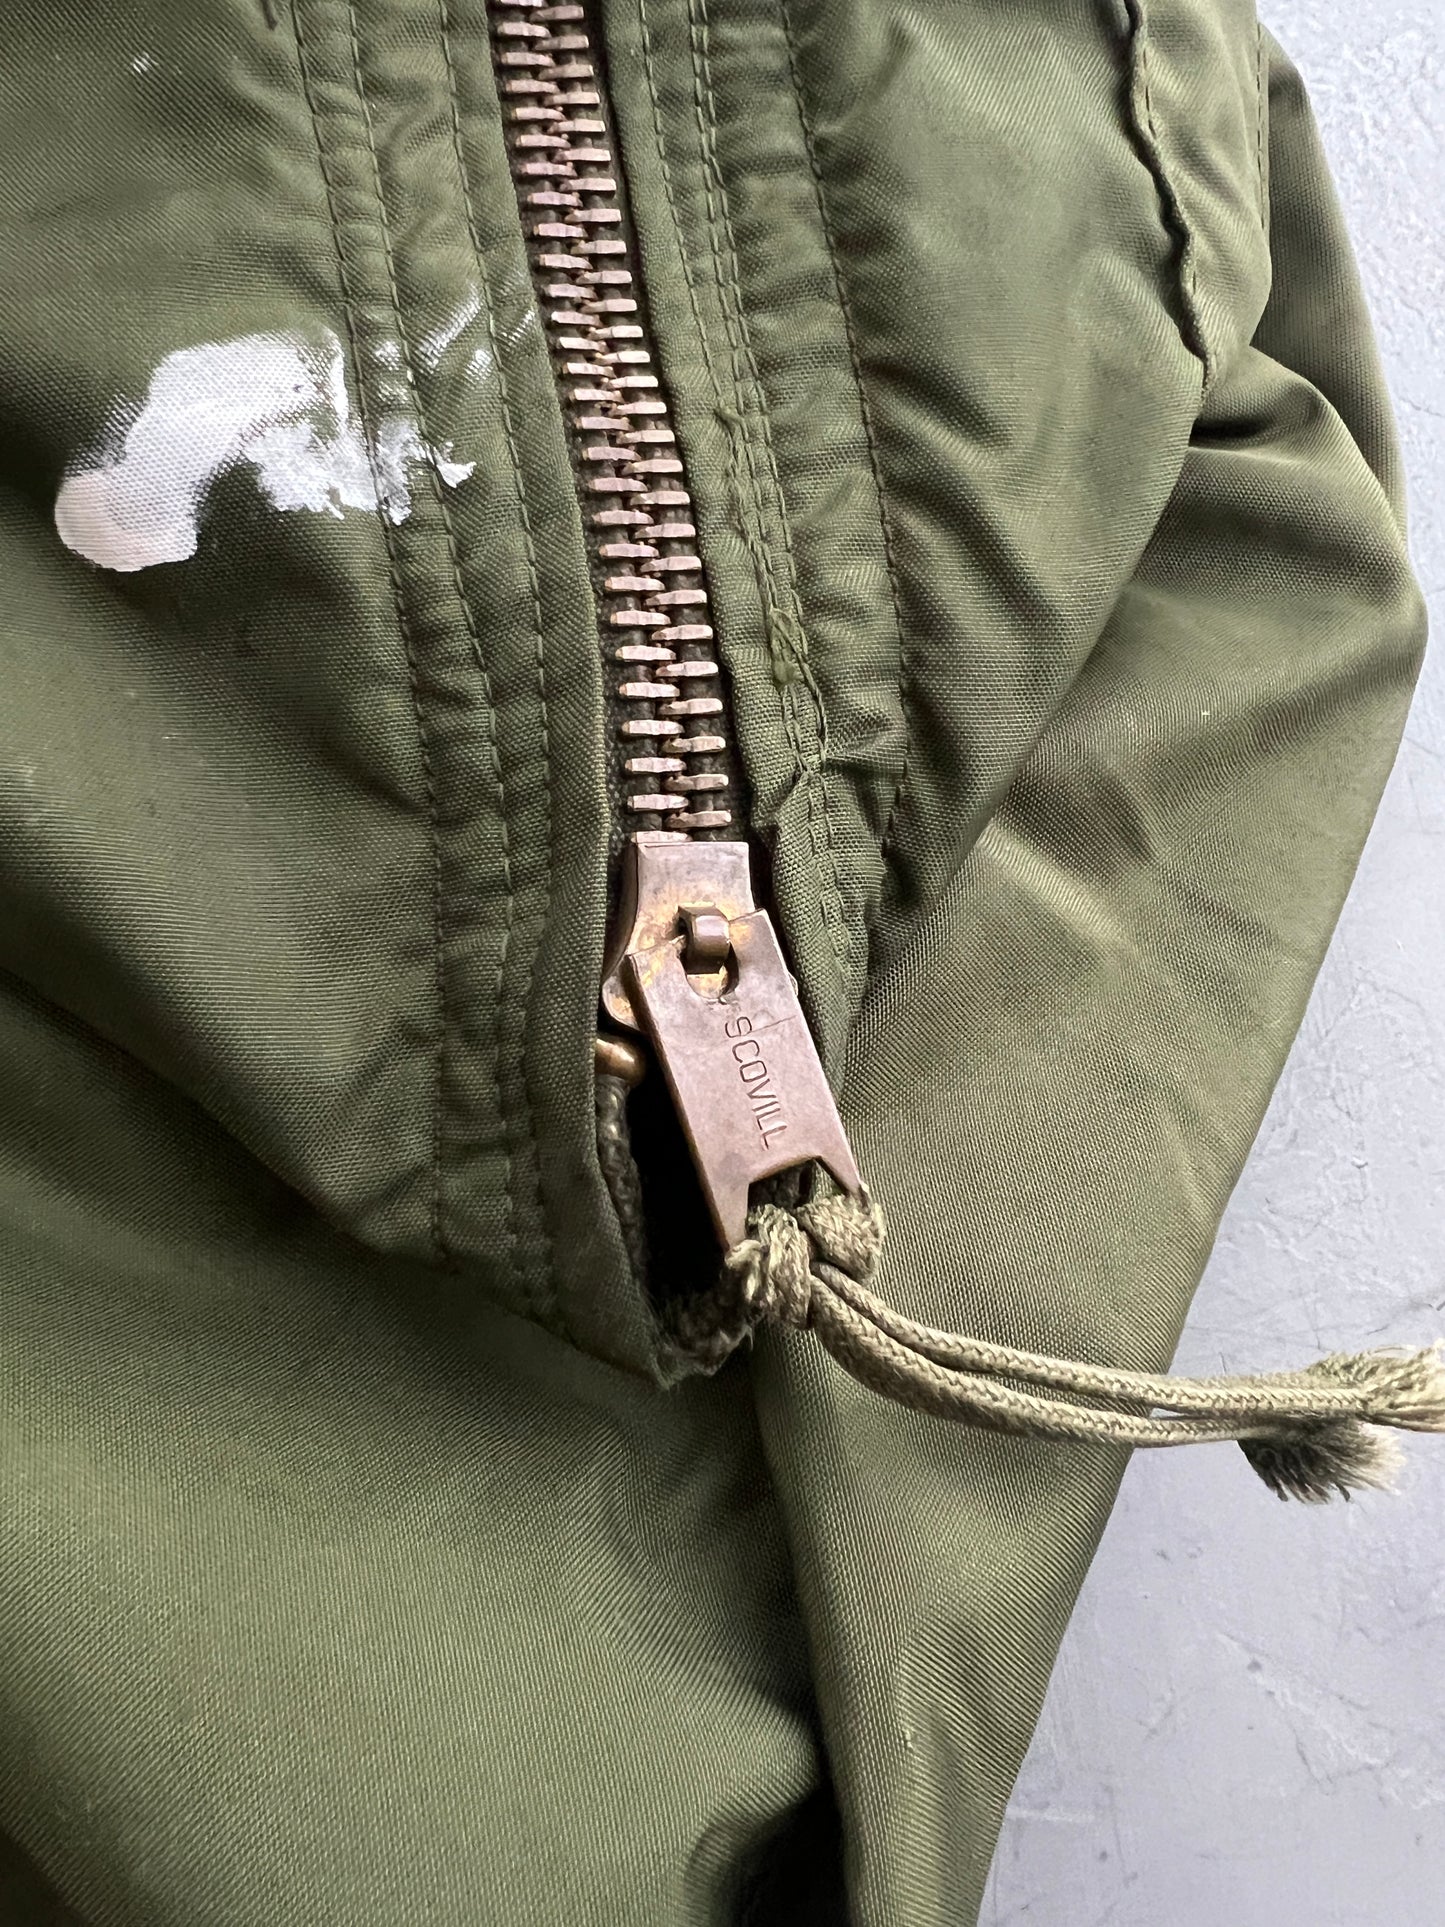 Large US Military Kit Bag